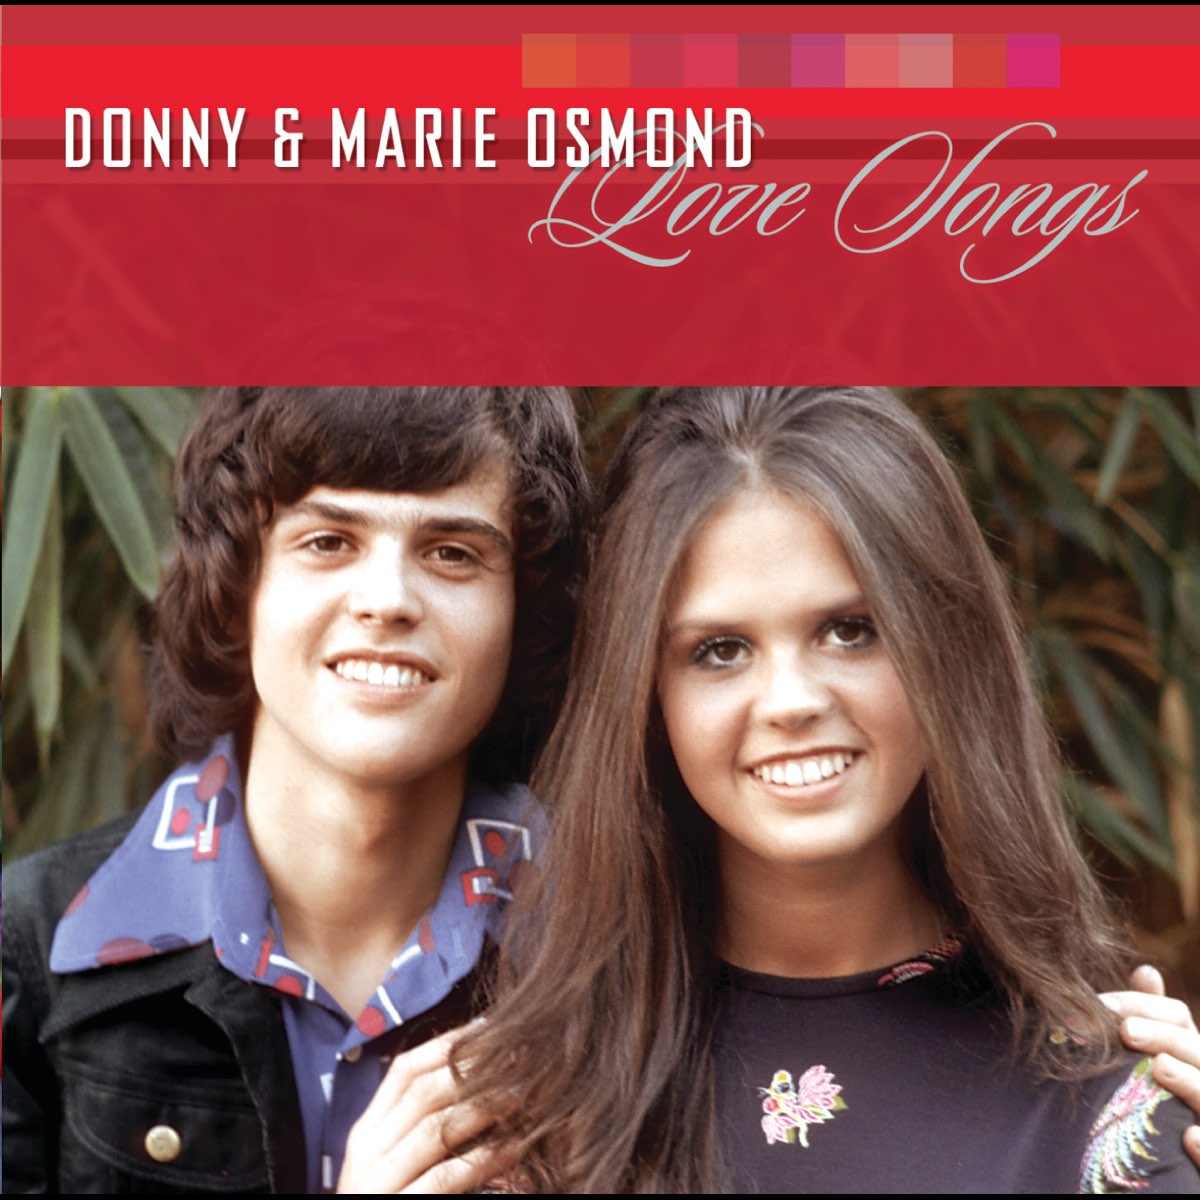 Listen to Love Songs by Donny Osmond & Marie Osmond on Apple Music. 